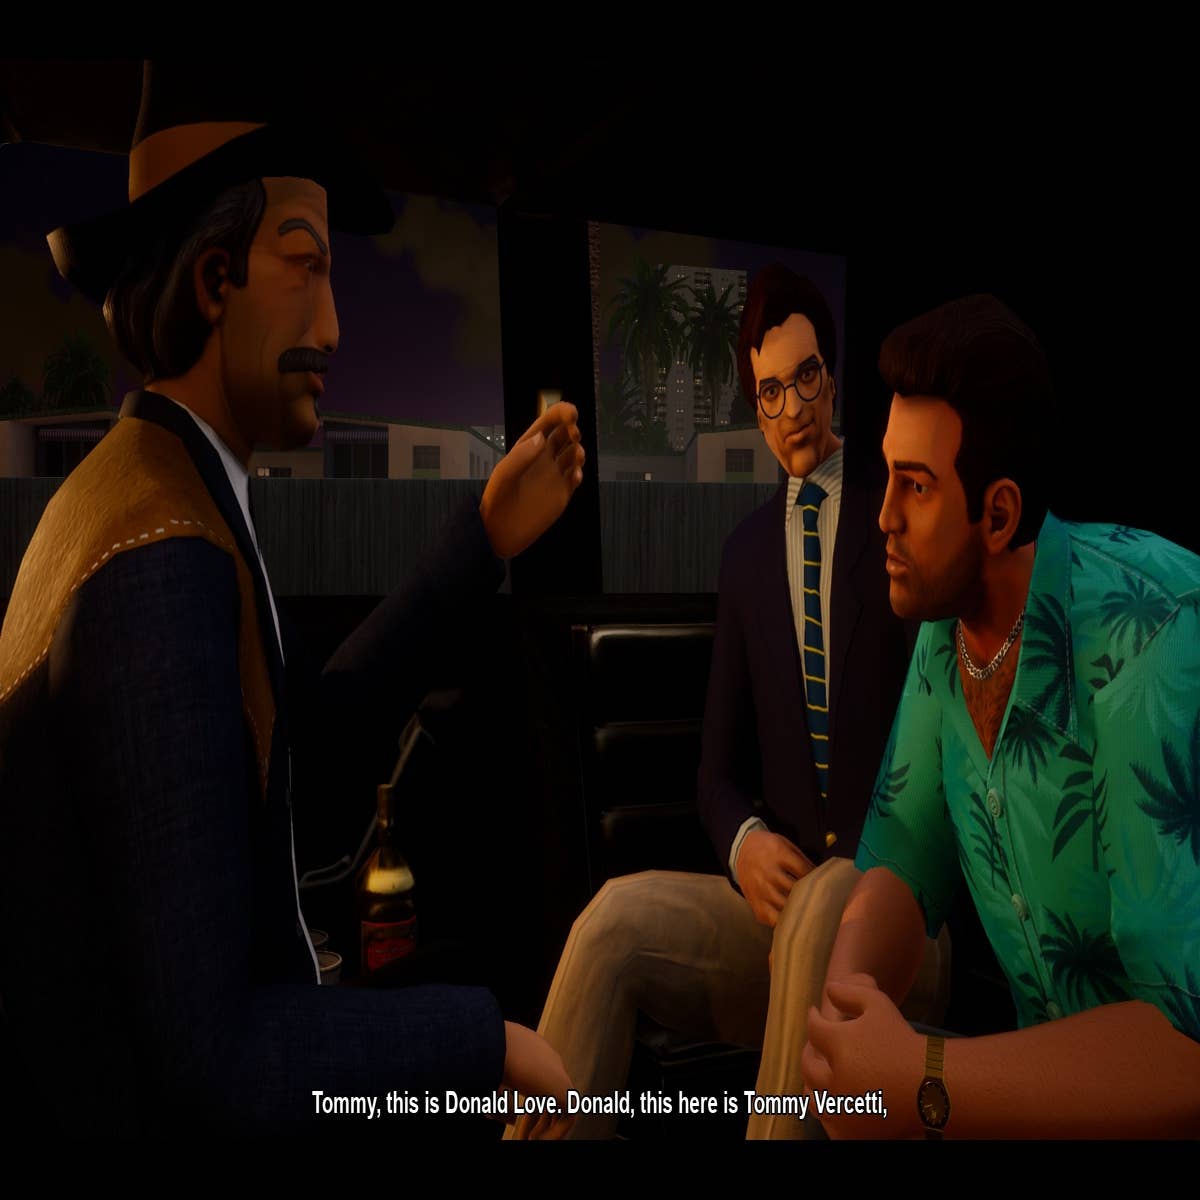 Rockstar North boss leaves Grand Theft Auto developer